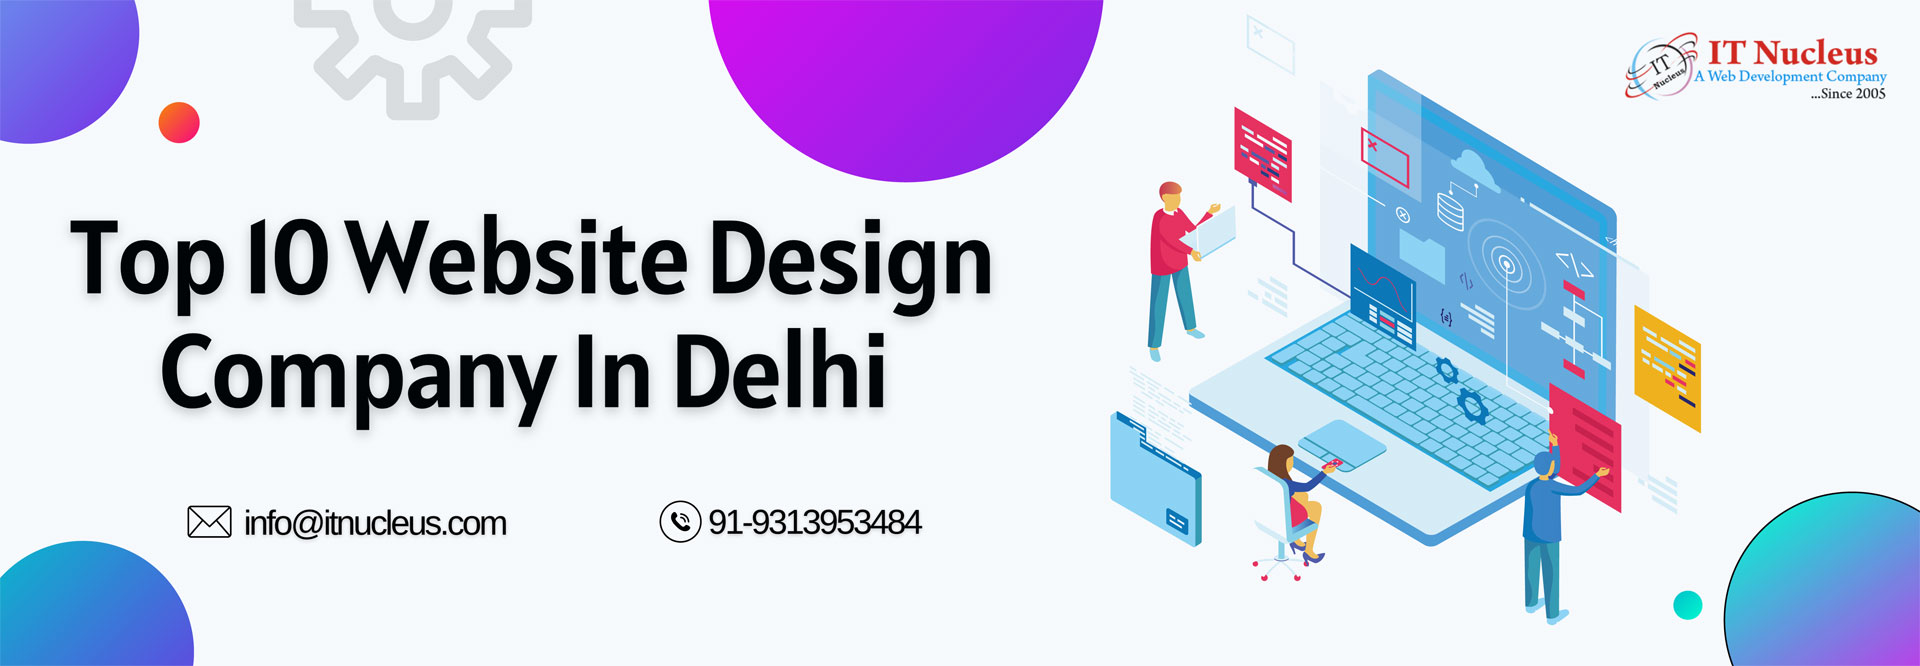 Top 10 Website Design Company In Delhi